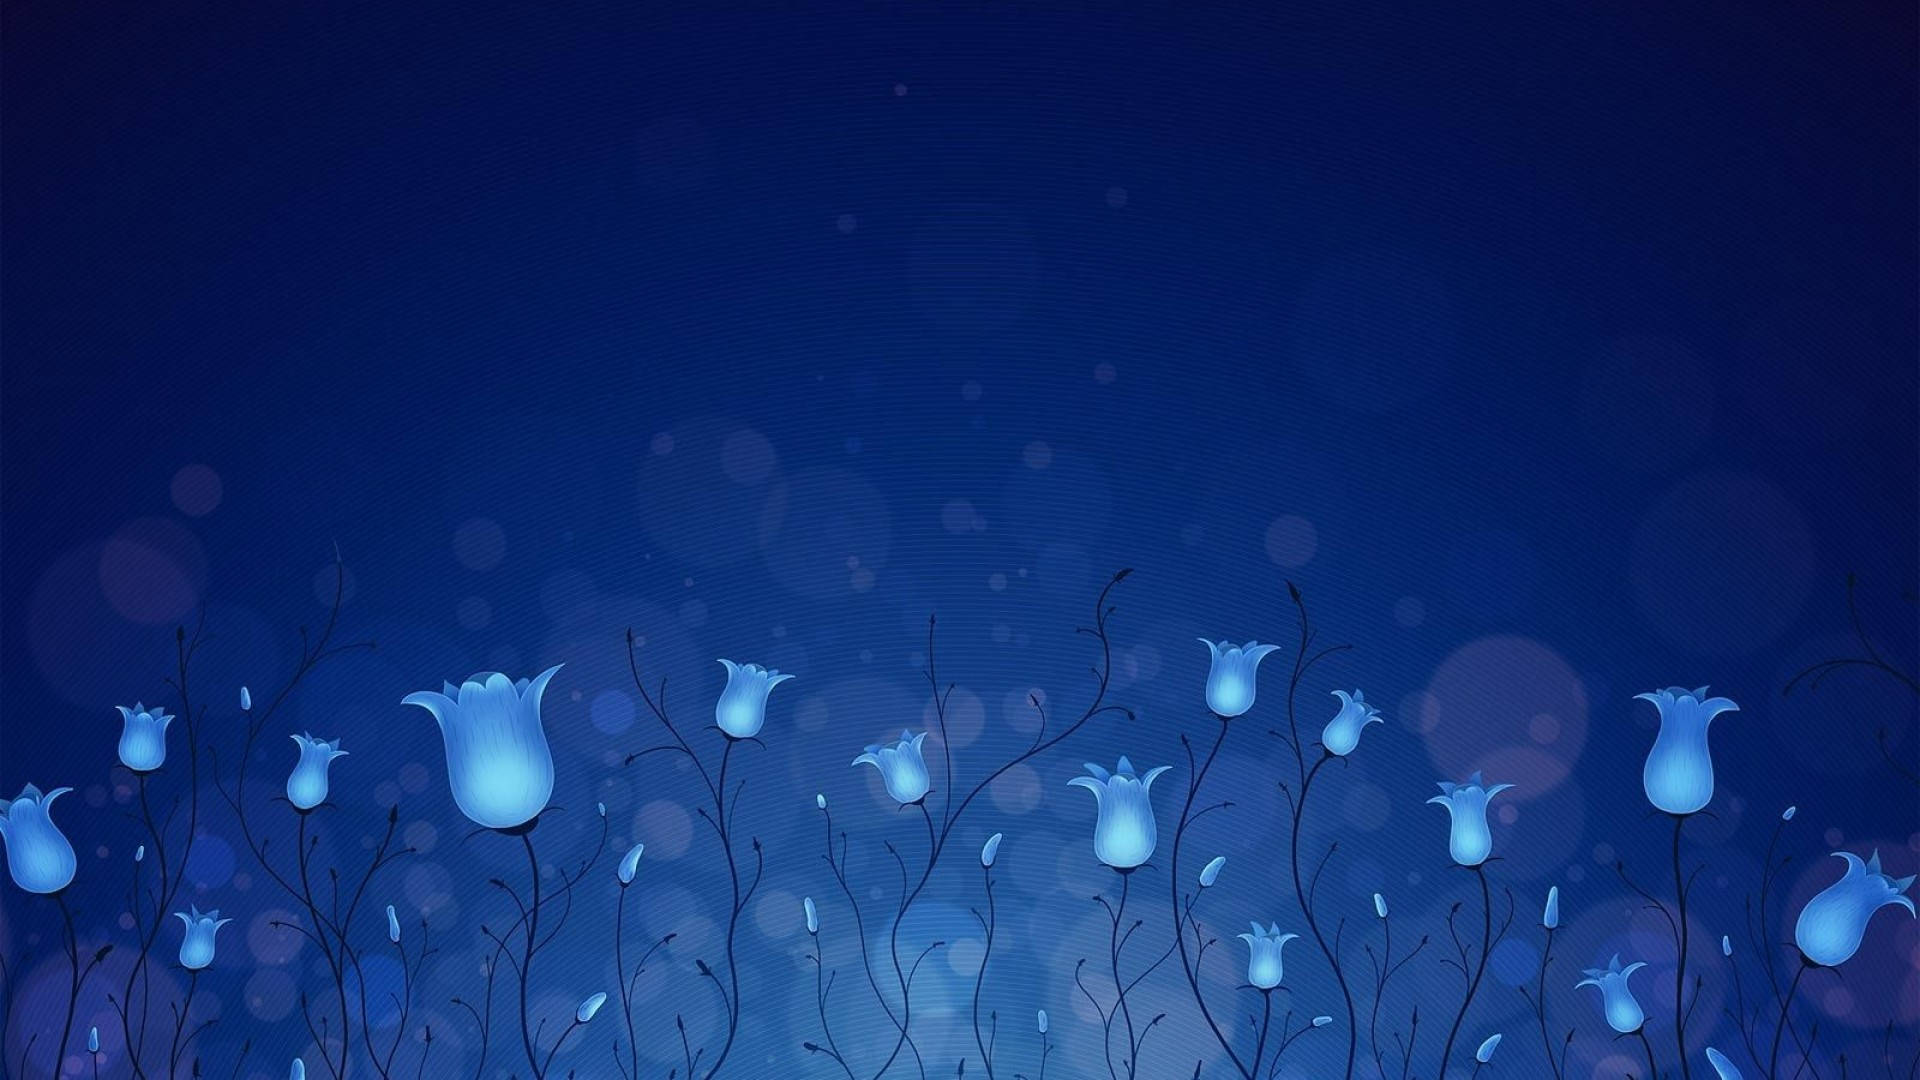 Neon Blue Aesthetic Floral Digital Art Background